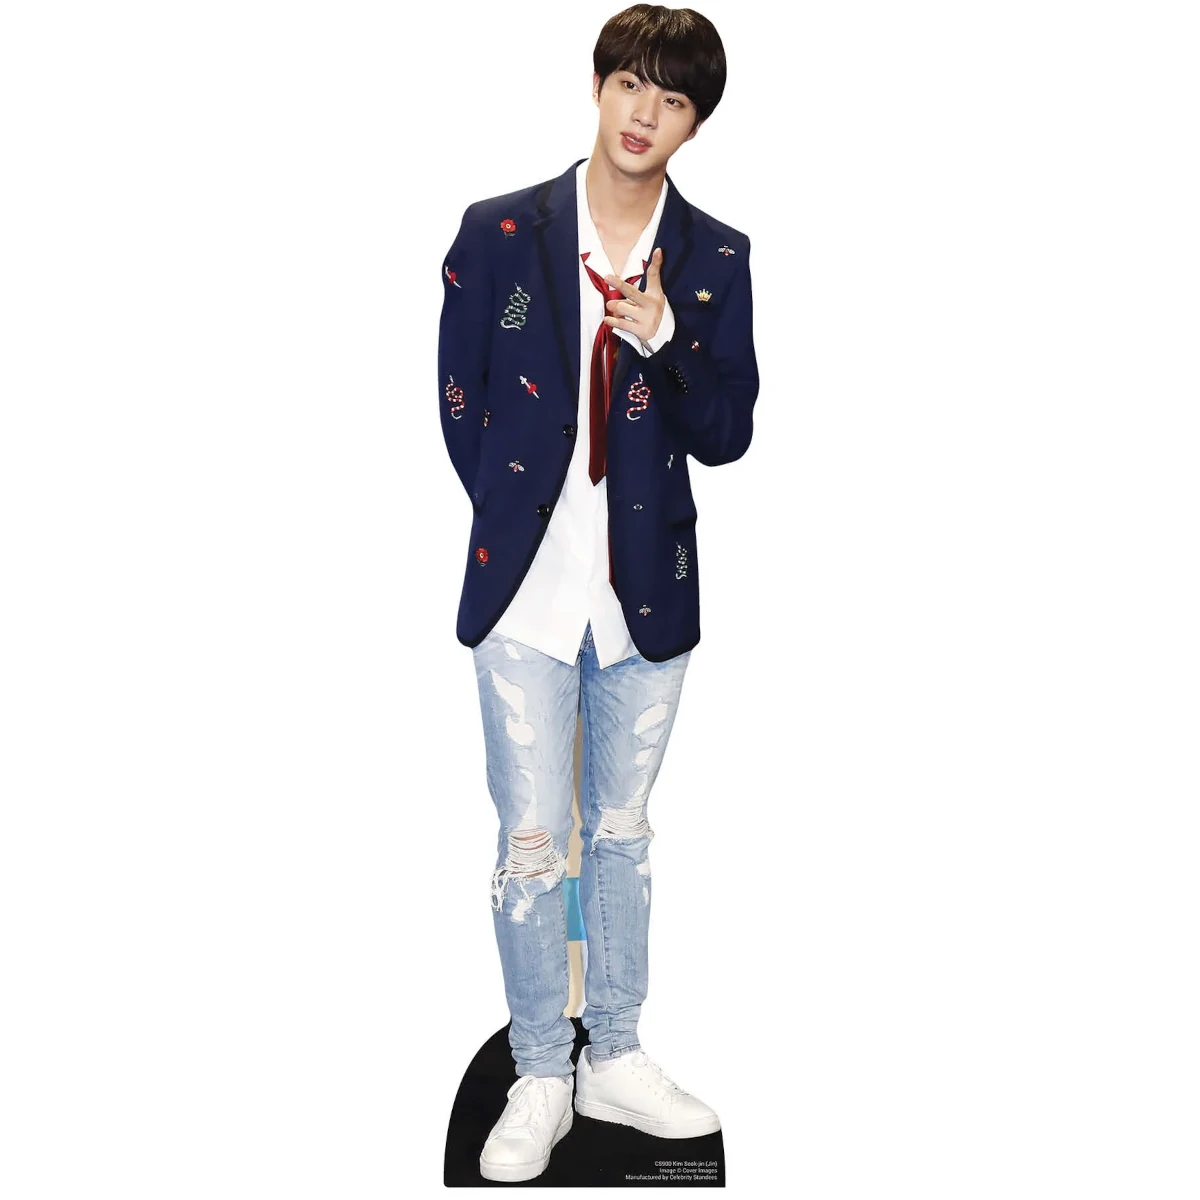 CS900 Jin 'Blue Blazer' (BTS Bangtan Boys) Mini Cardboard Cutout Standee Front